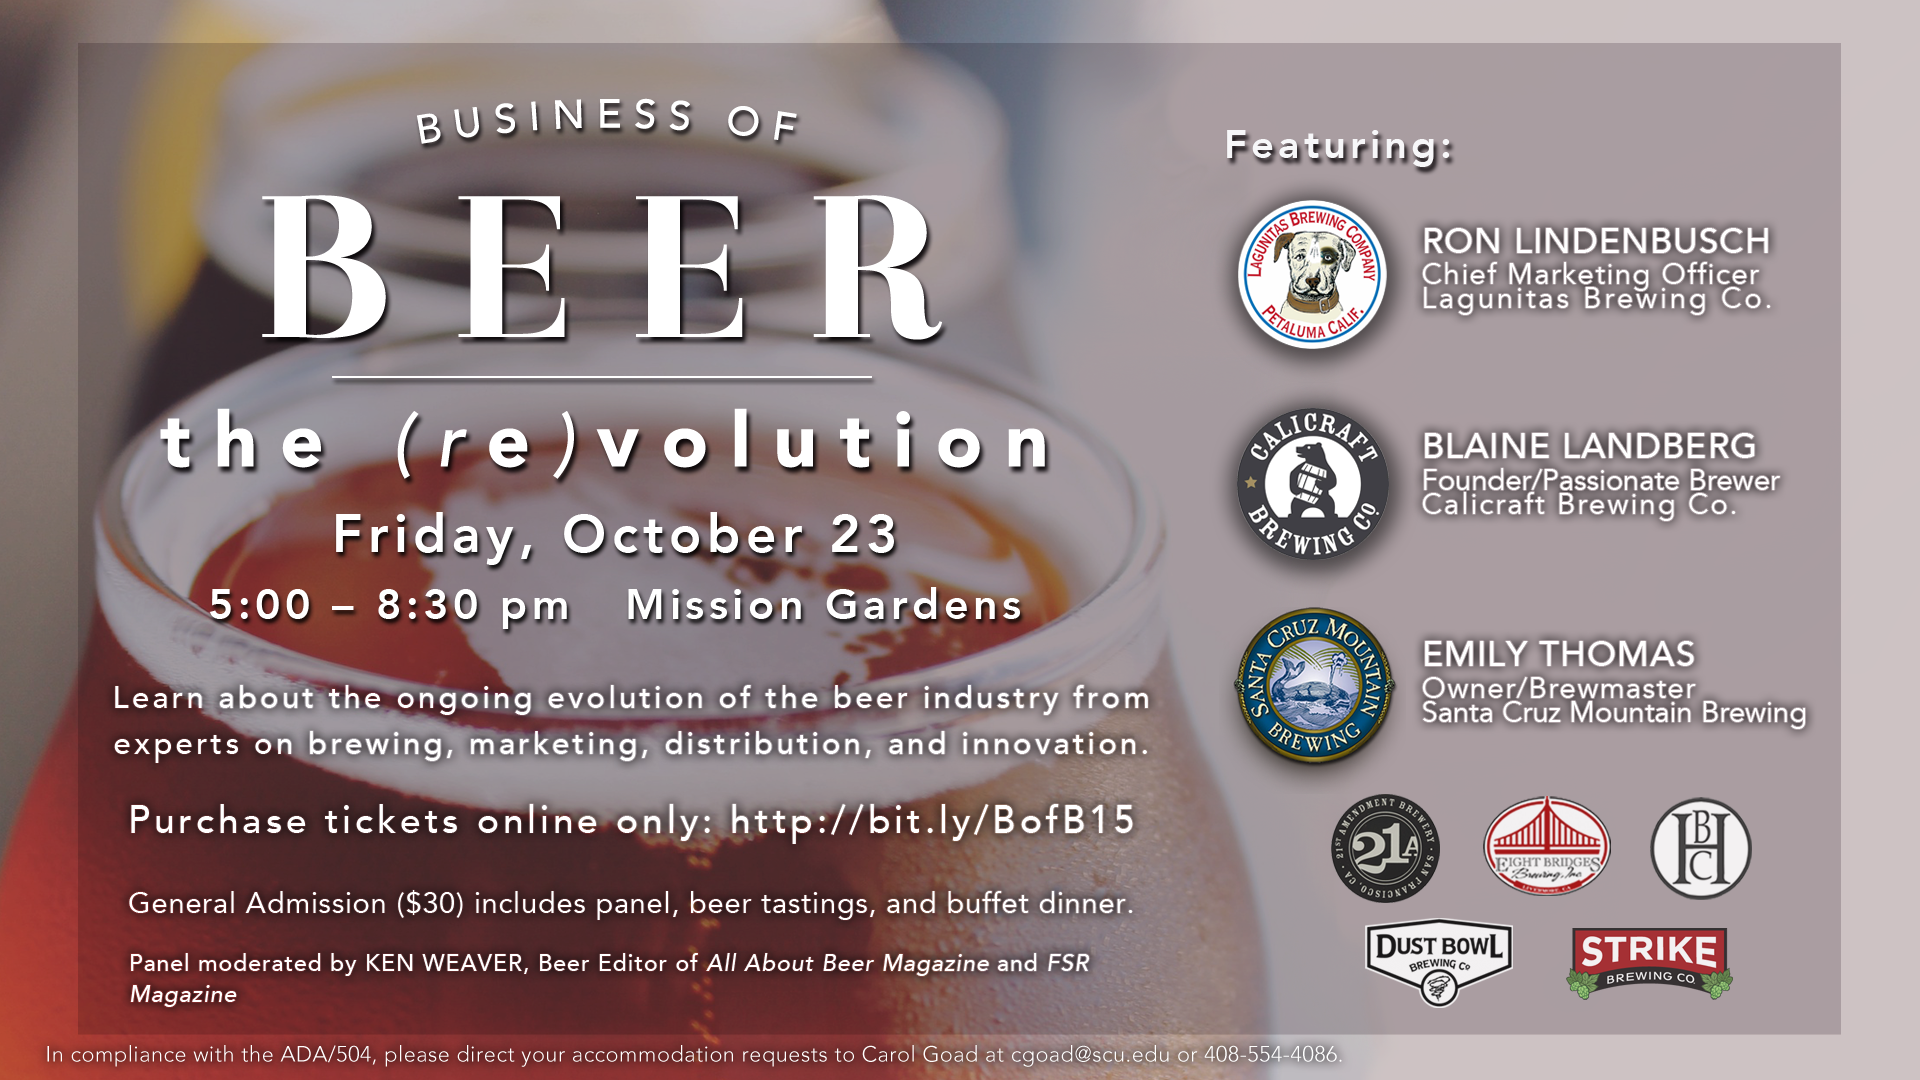 Business of Beer 2015 event flyer